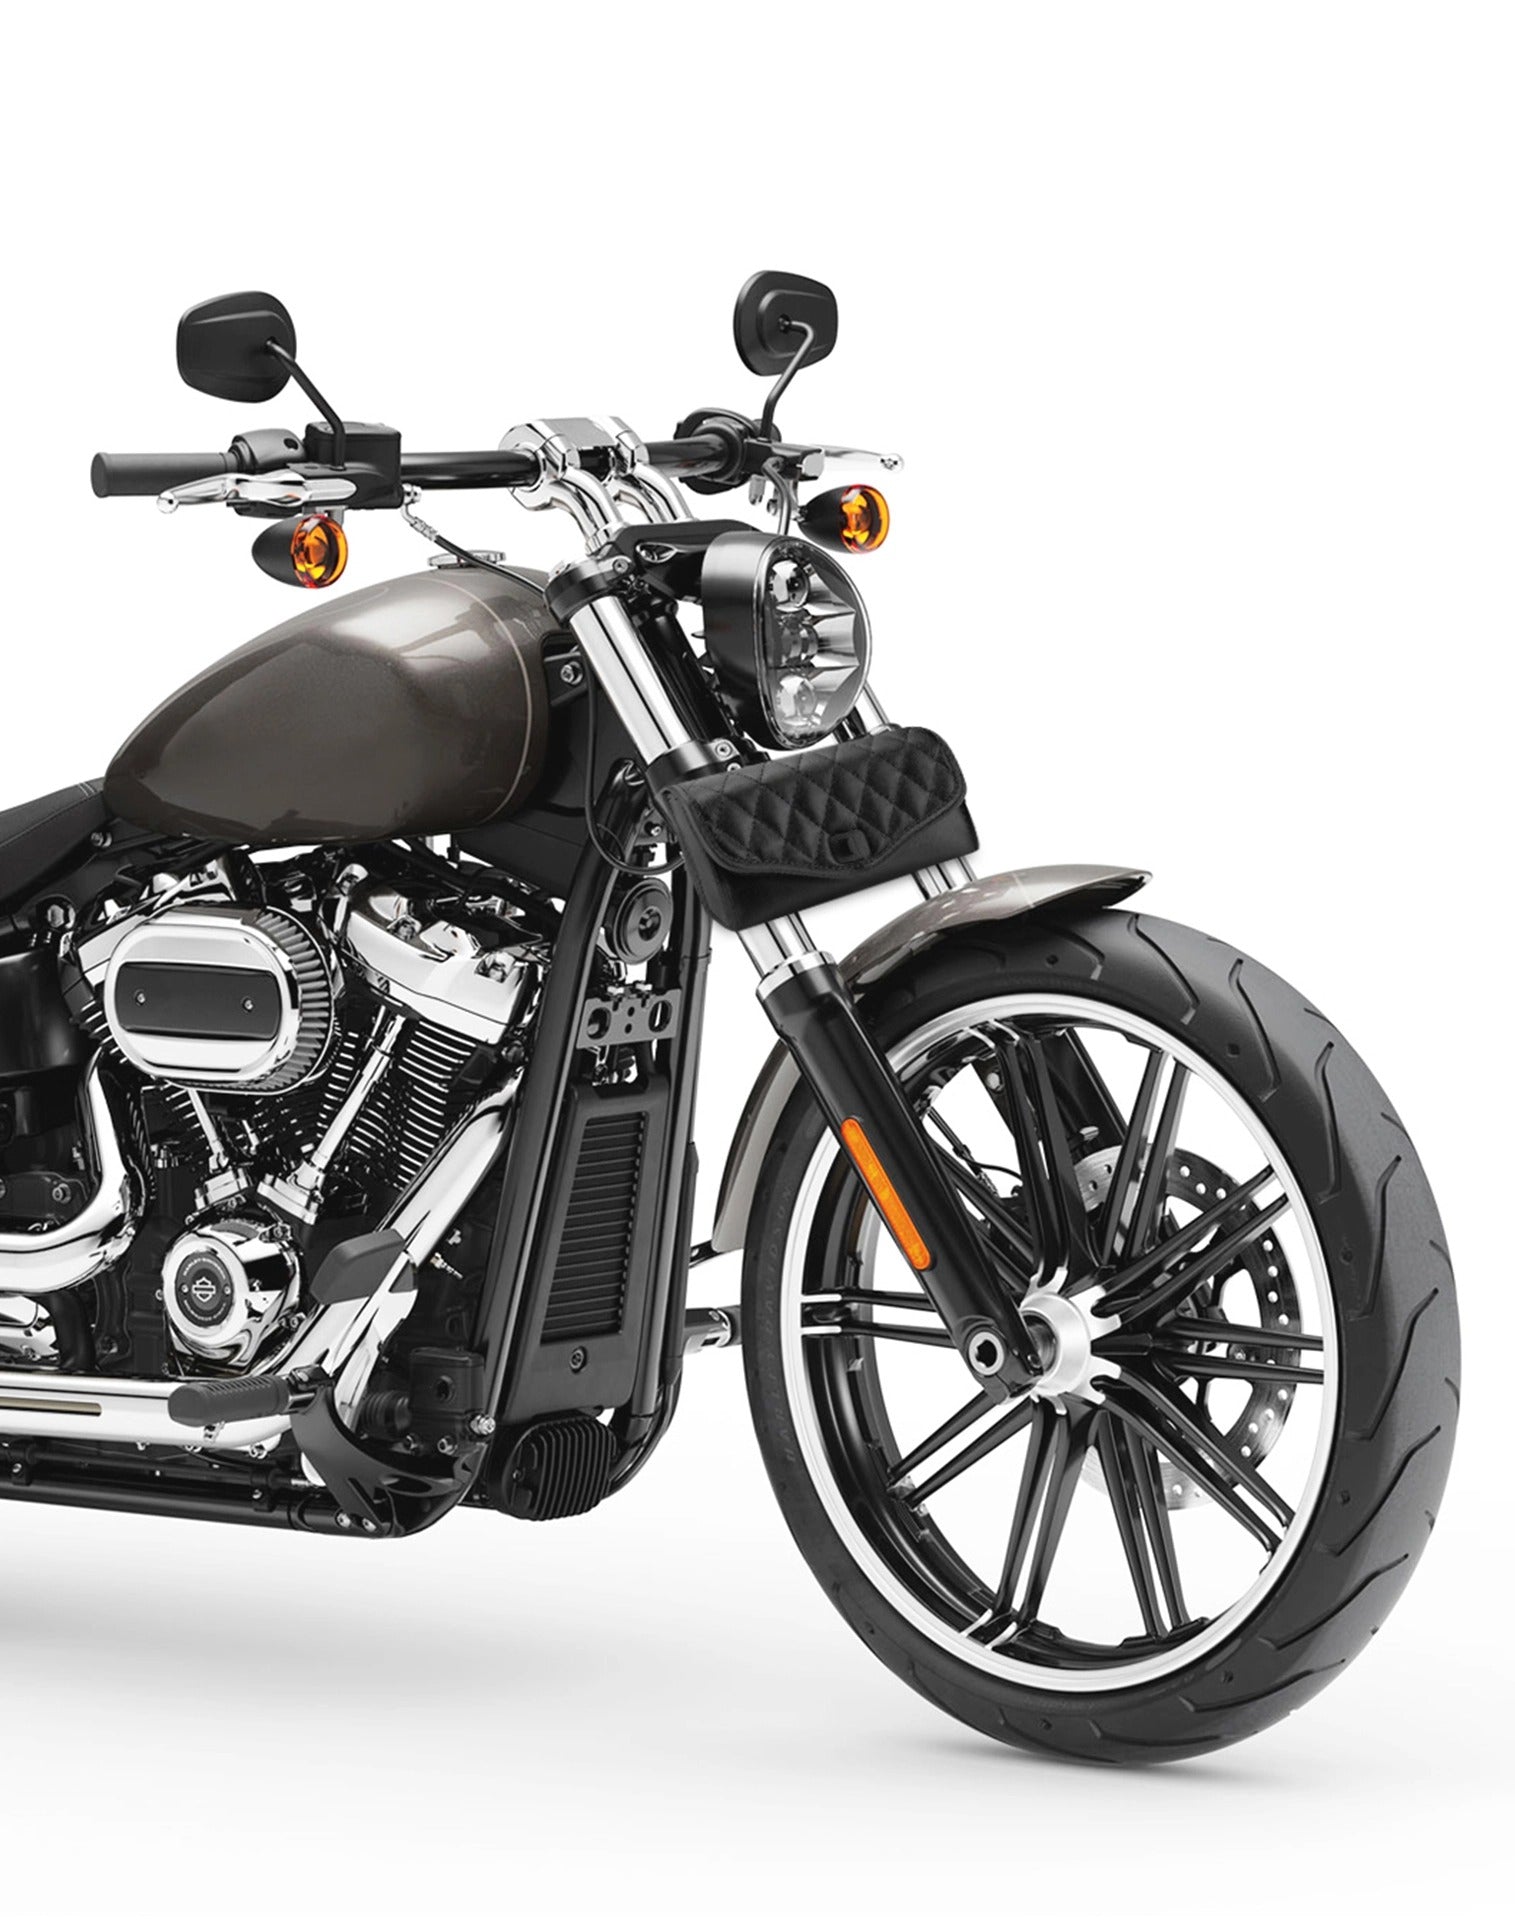 Viking Iron Born Diamond Stitch Leather Motorcycle Handlebar Bag for Harley Davidson Close Up View